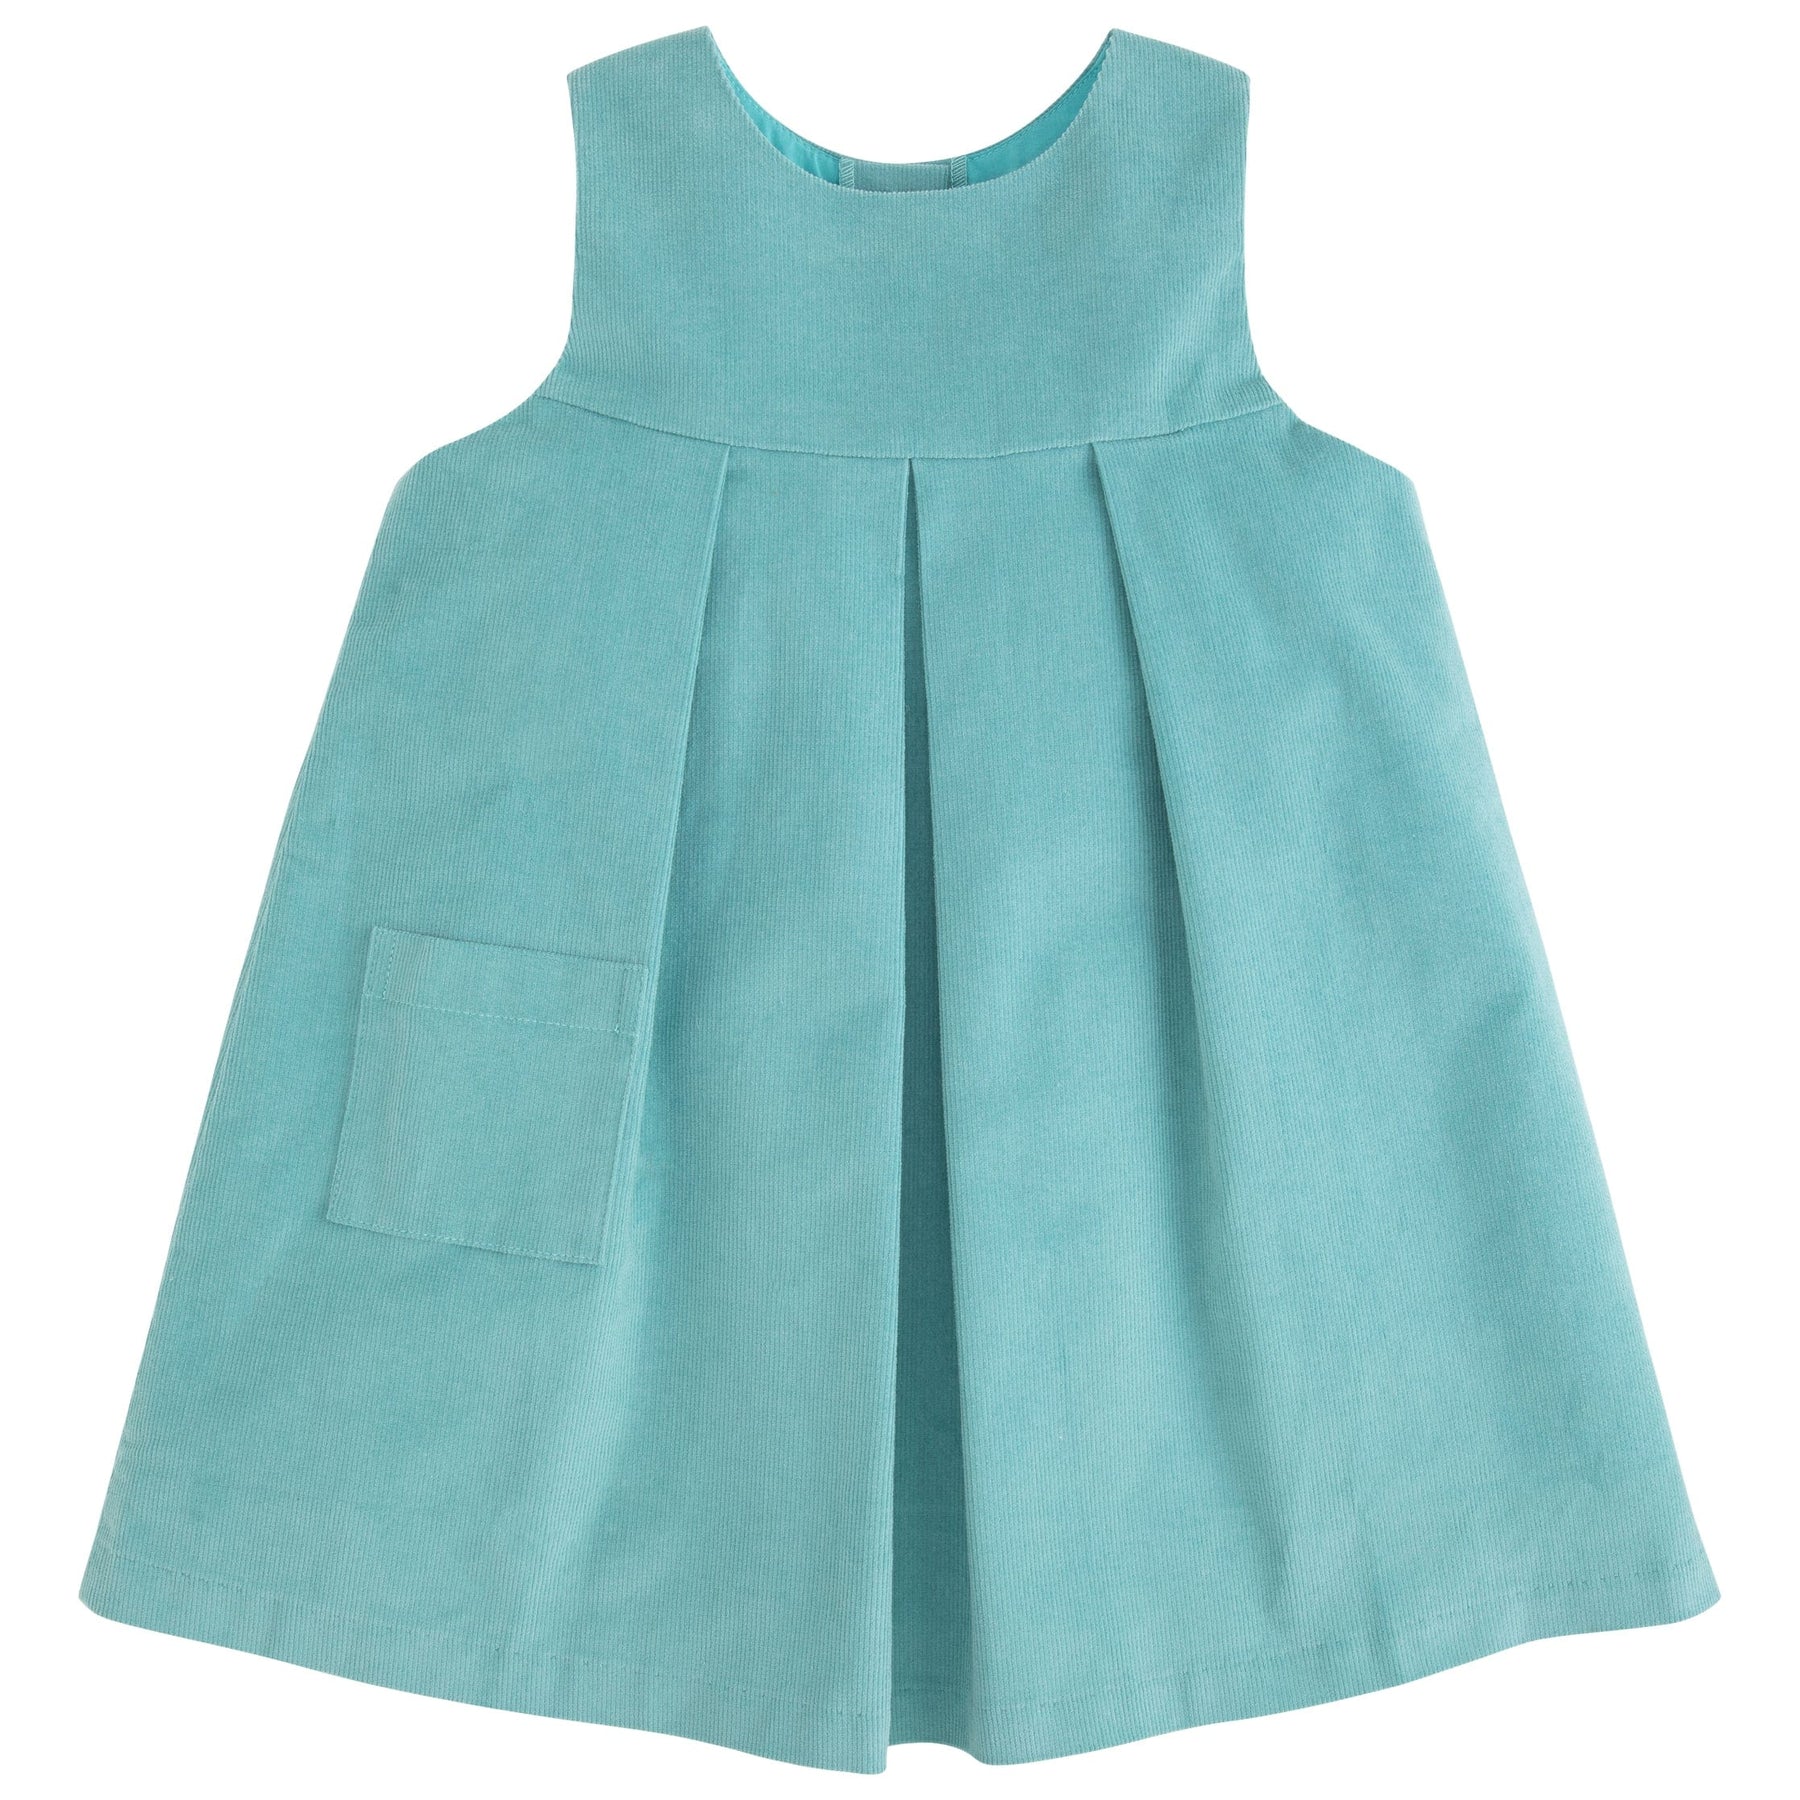 seguridadindustrialcr classic childrens clothing girls pleated green/blue corduroy jumper